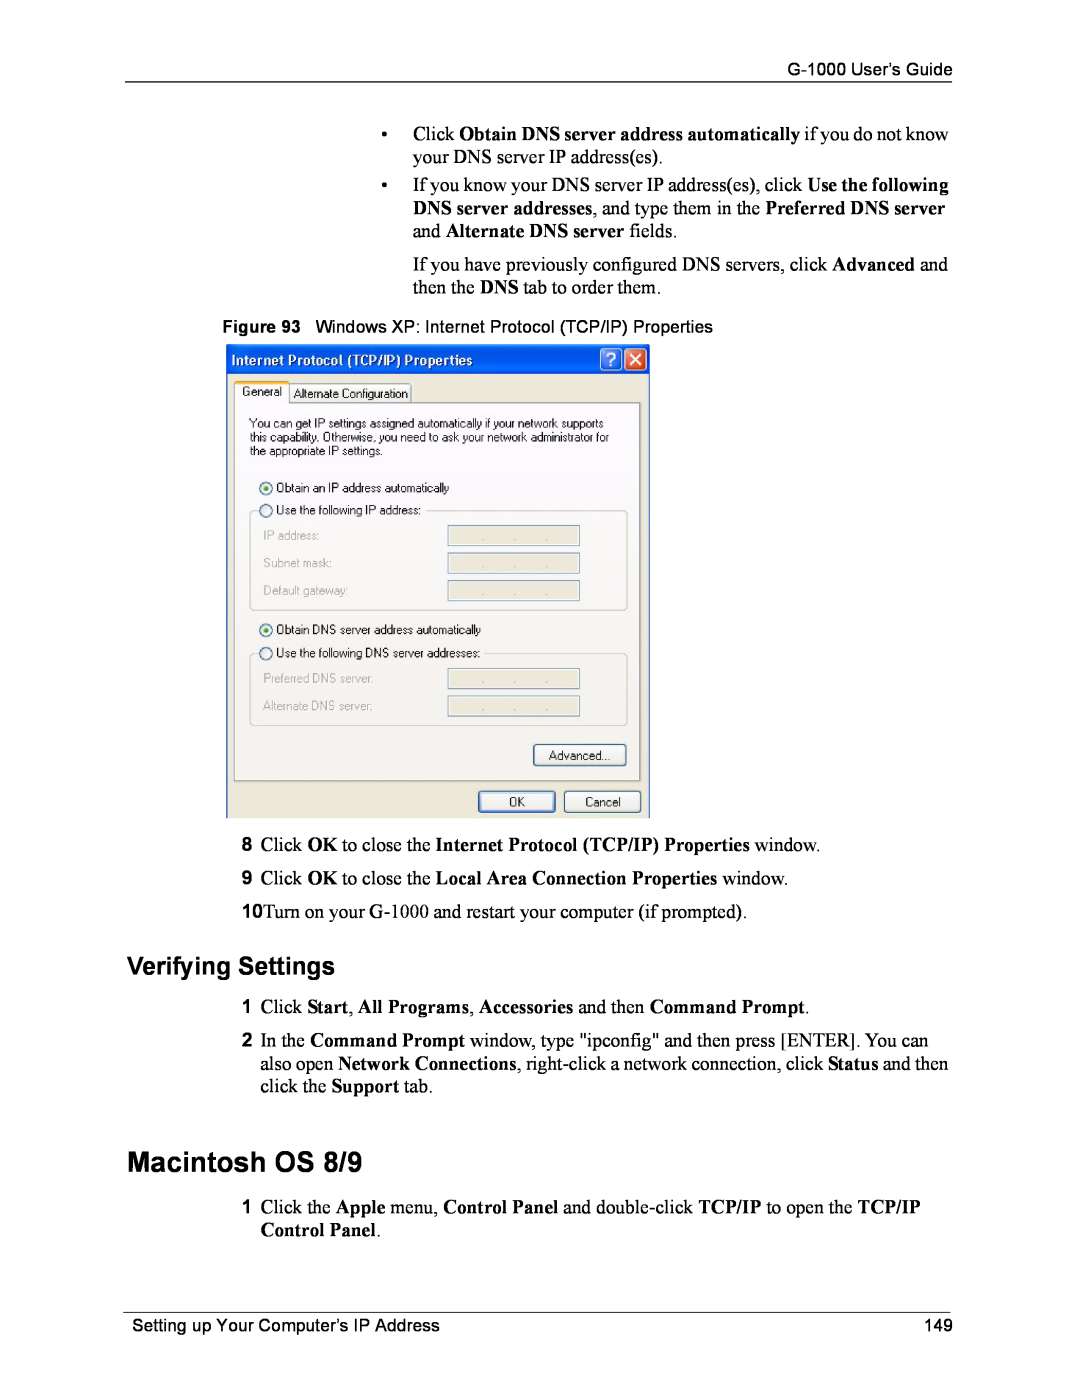 ZyXEL Communications G-1000 manual Macintosh OS 8/9, Verifying Settings 